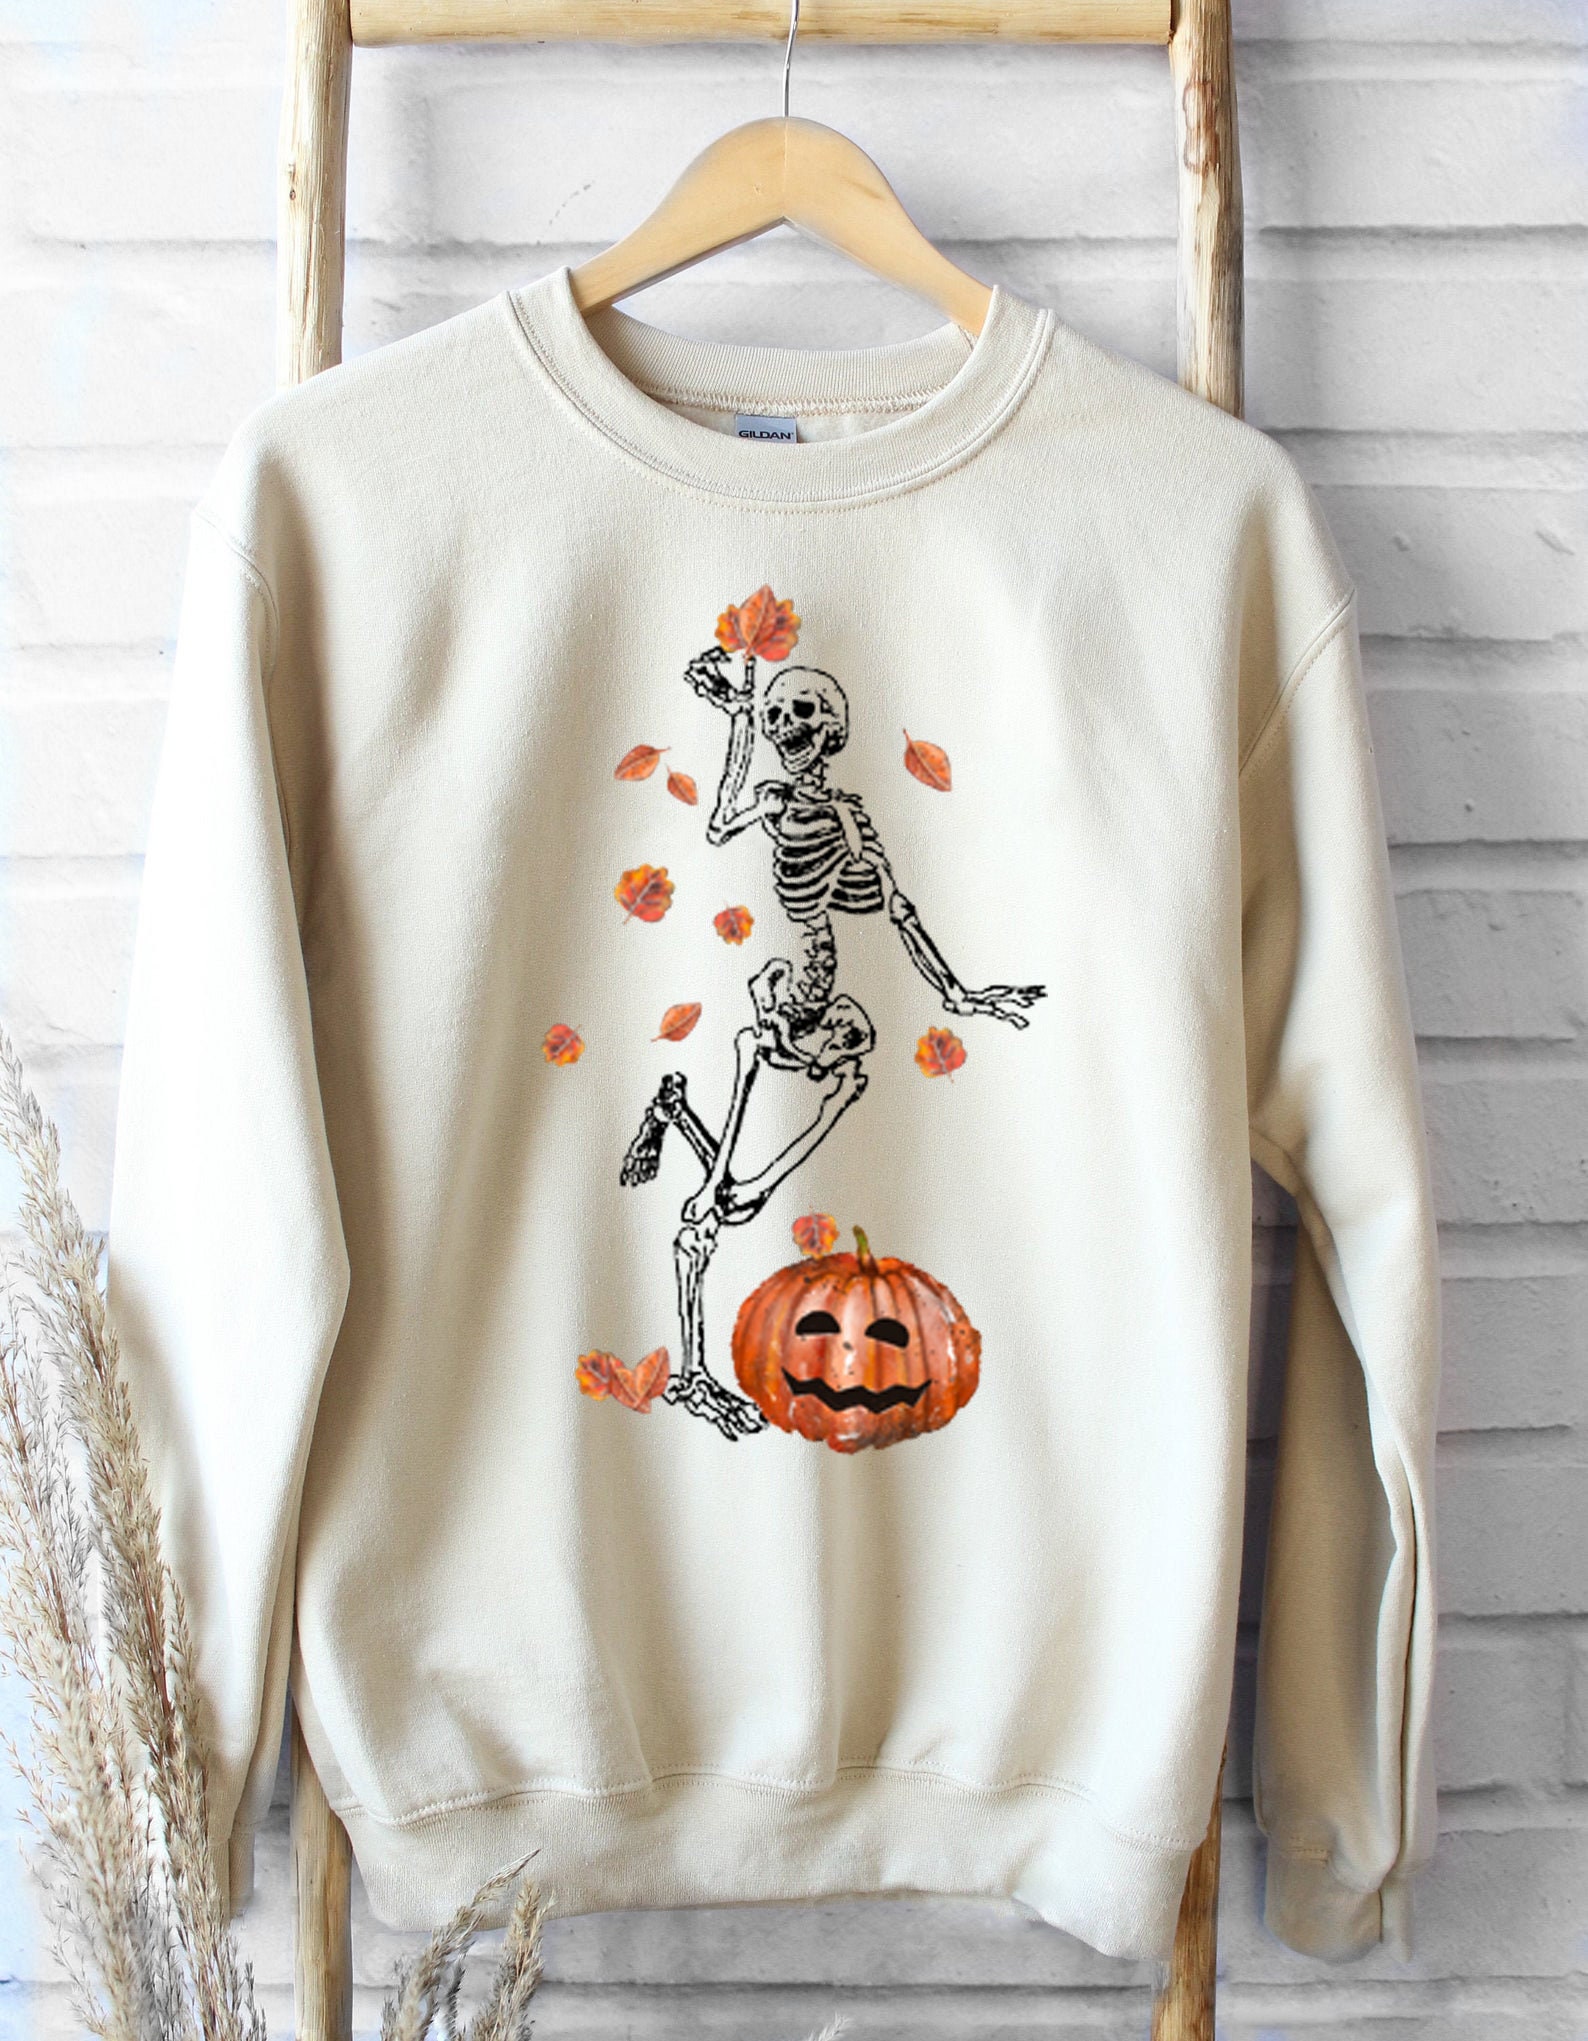 Discover Skeleton Crewneck Sweater, Pumpkin Patch Jumper, Boho Halloween Pullover, Unisex Fall Top, Oversized Toddler Sweatshirt,Long Sleeve Tank Top